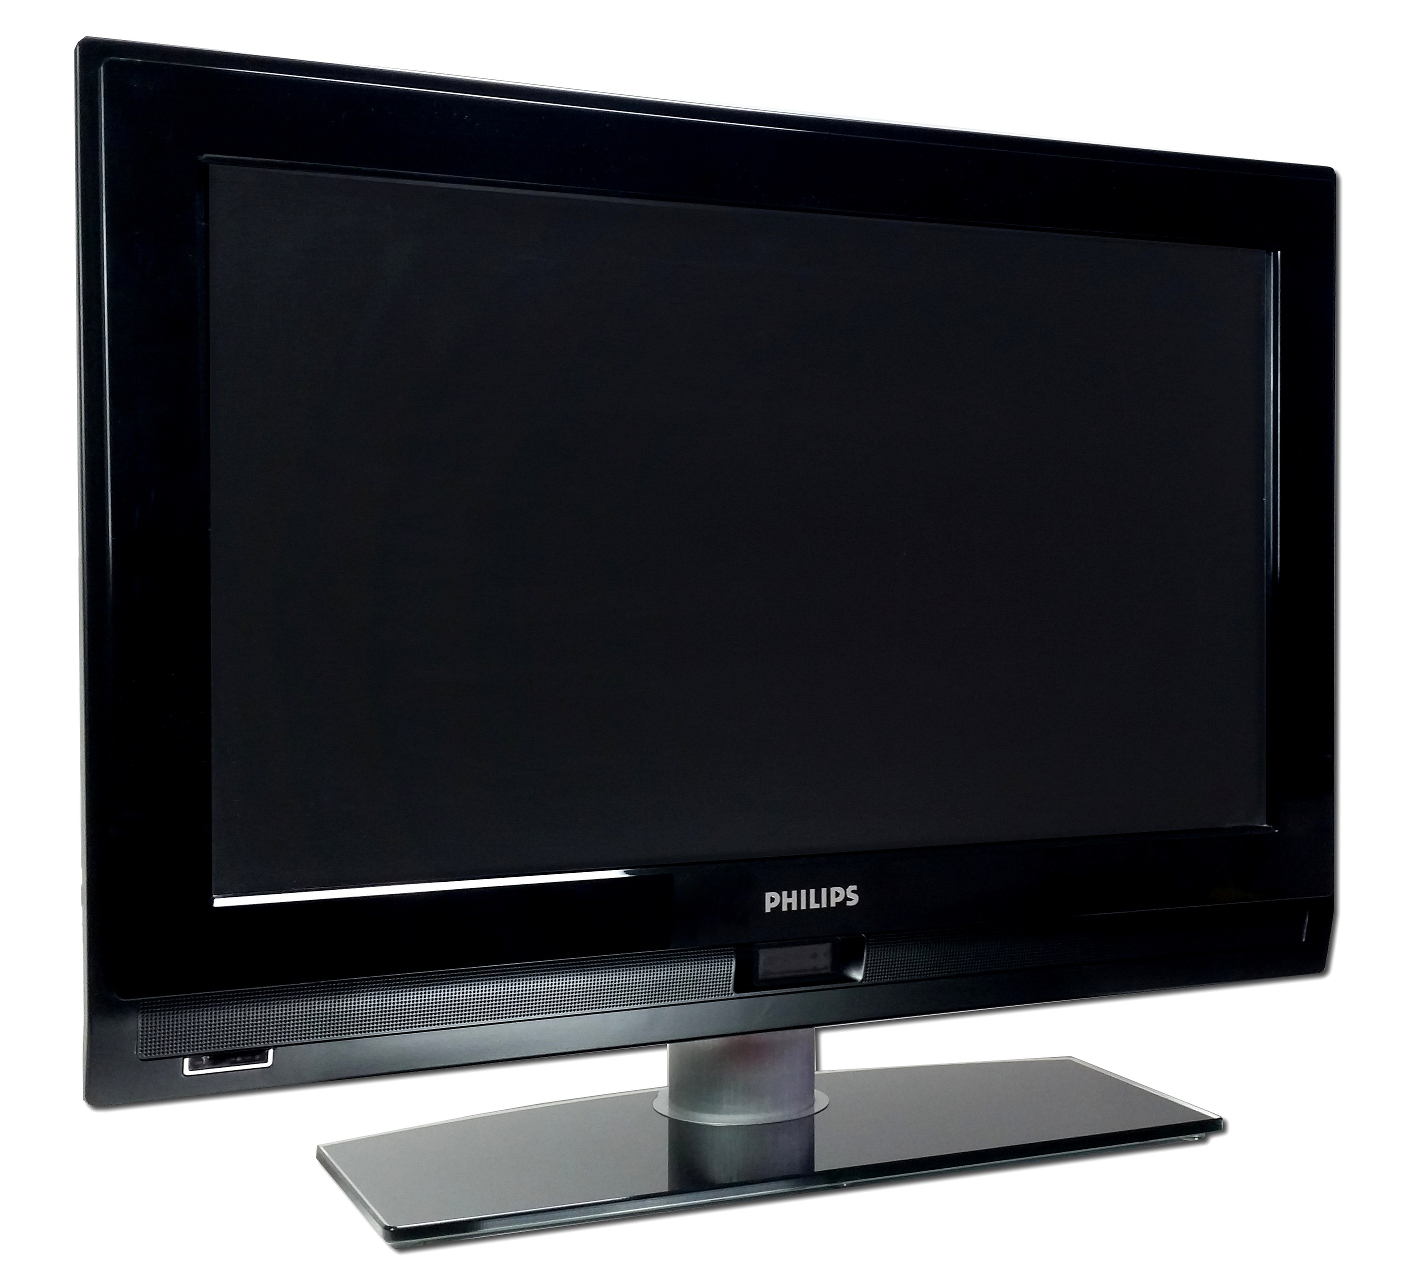 Flat 32. Philips Flat TV 42 плазма. Philips 32hf7875 LCD Flat TV. Panasonic Viera LCD 32. Плазма Панасоник 42 дюйма Viera.